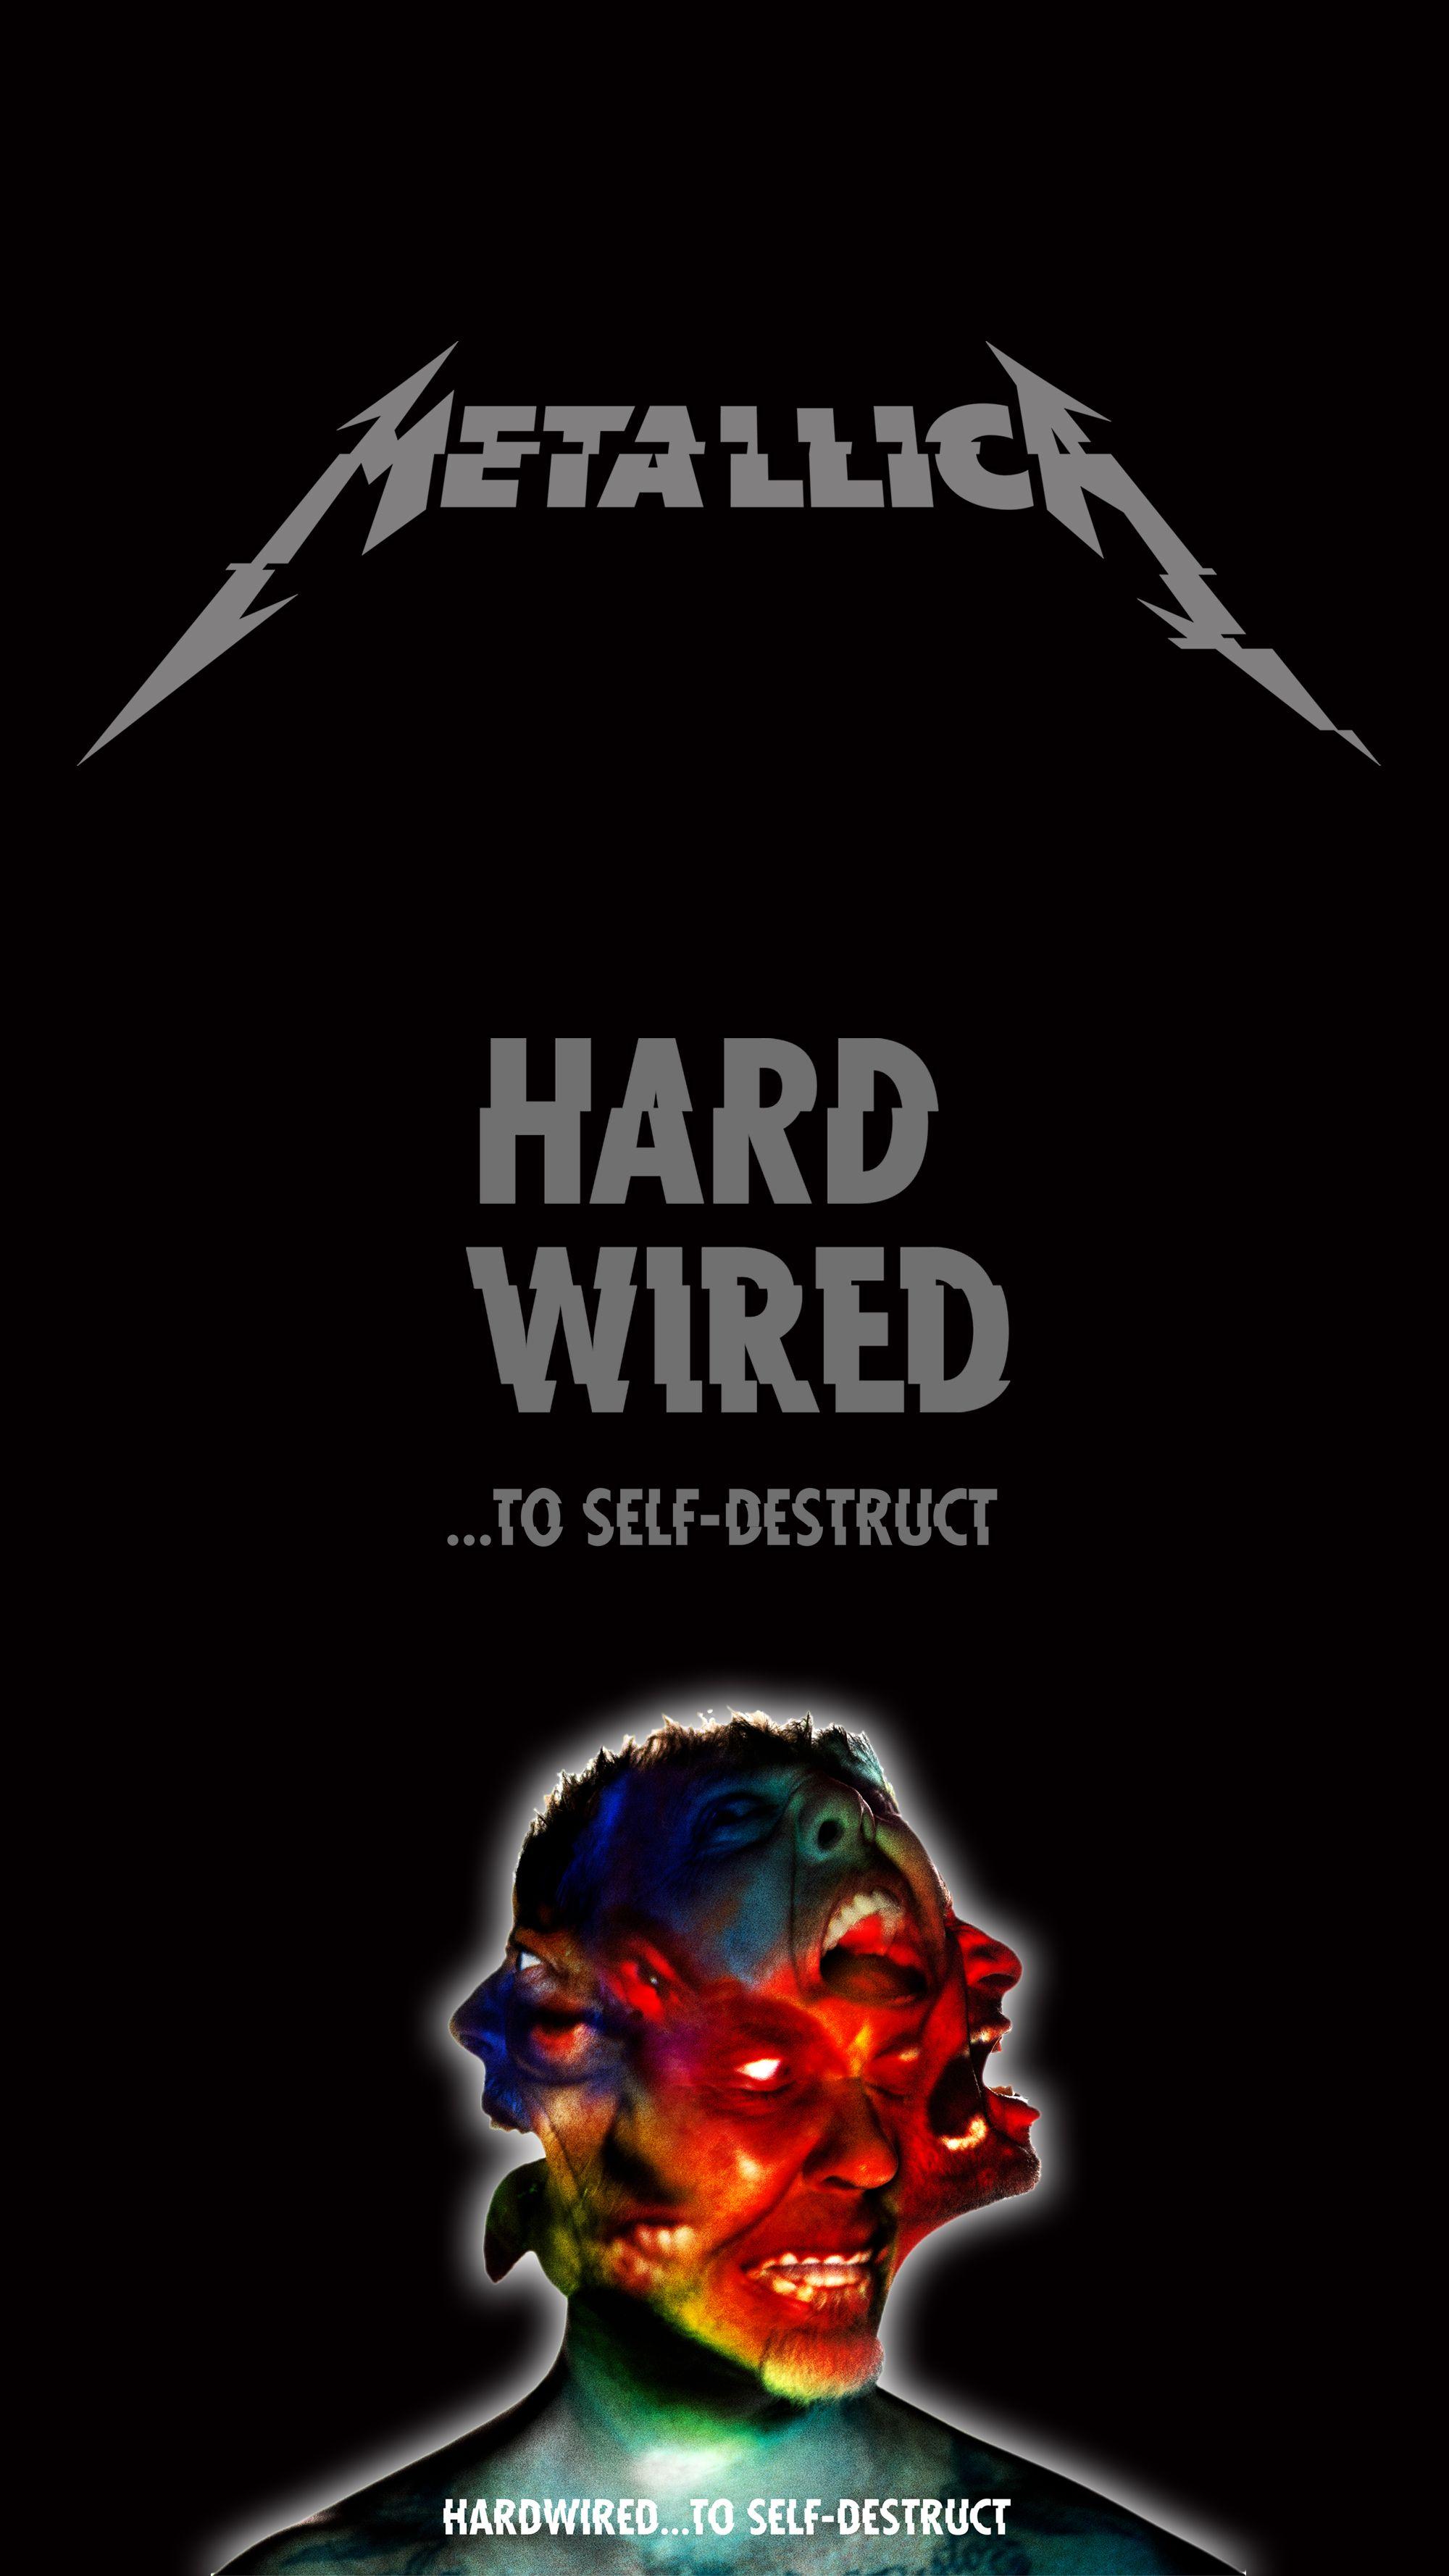 for wallpaper smartphone 5 #metallica #hardwired. Metallica, Metallica hardwired, Metallica lyrics